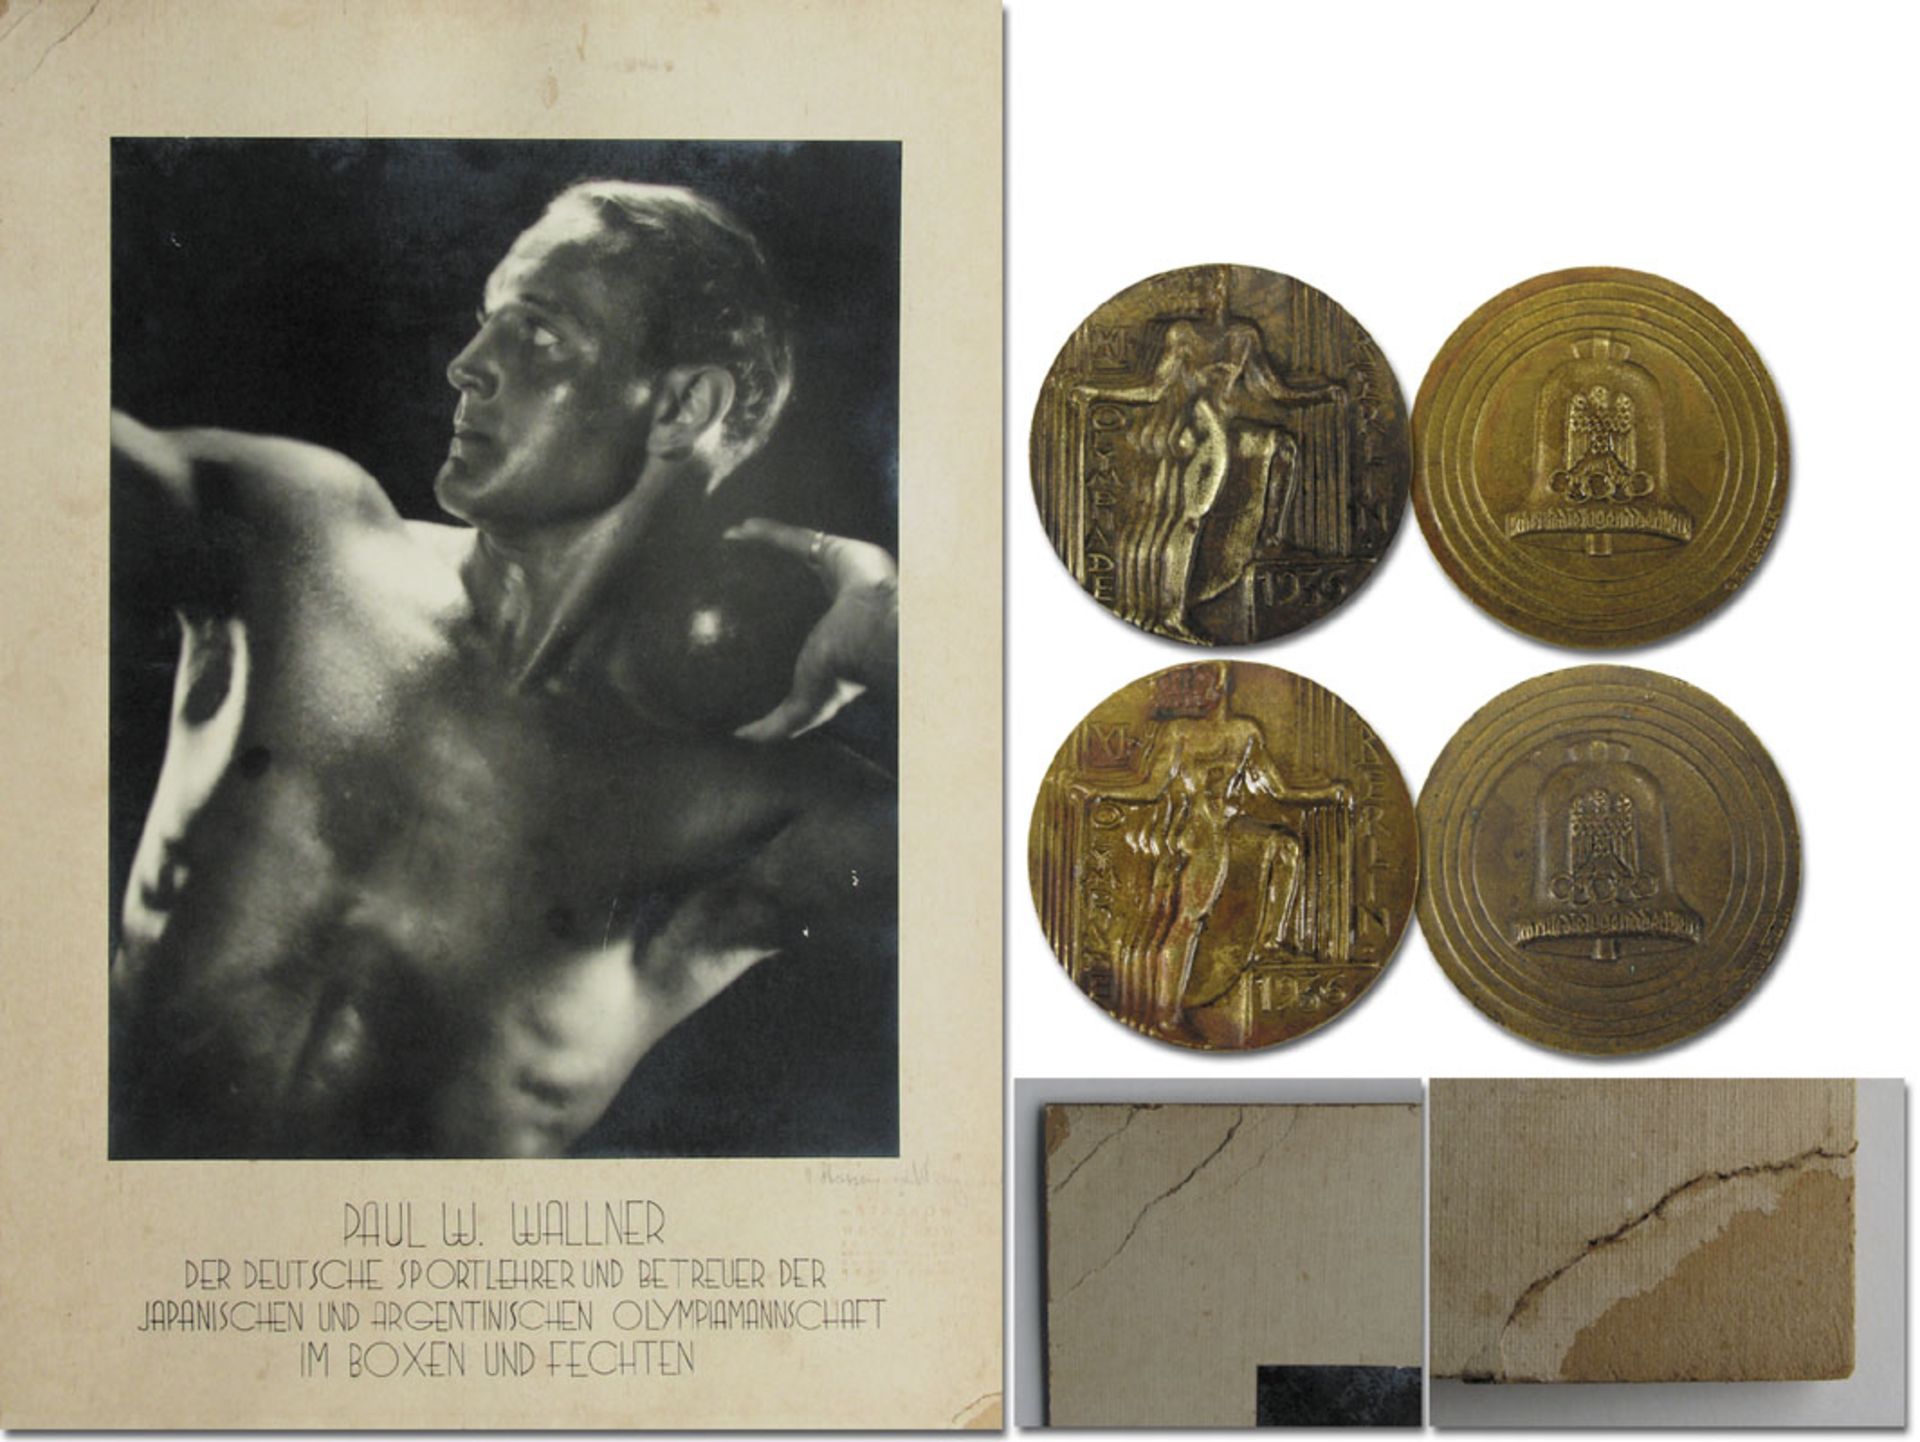 Olympic Games Berlin 1936 Medals Japan Foto - Large photo 49 x 39 cm. "Paul W. Wallner der deutsche